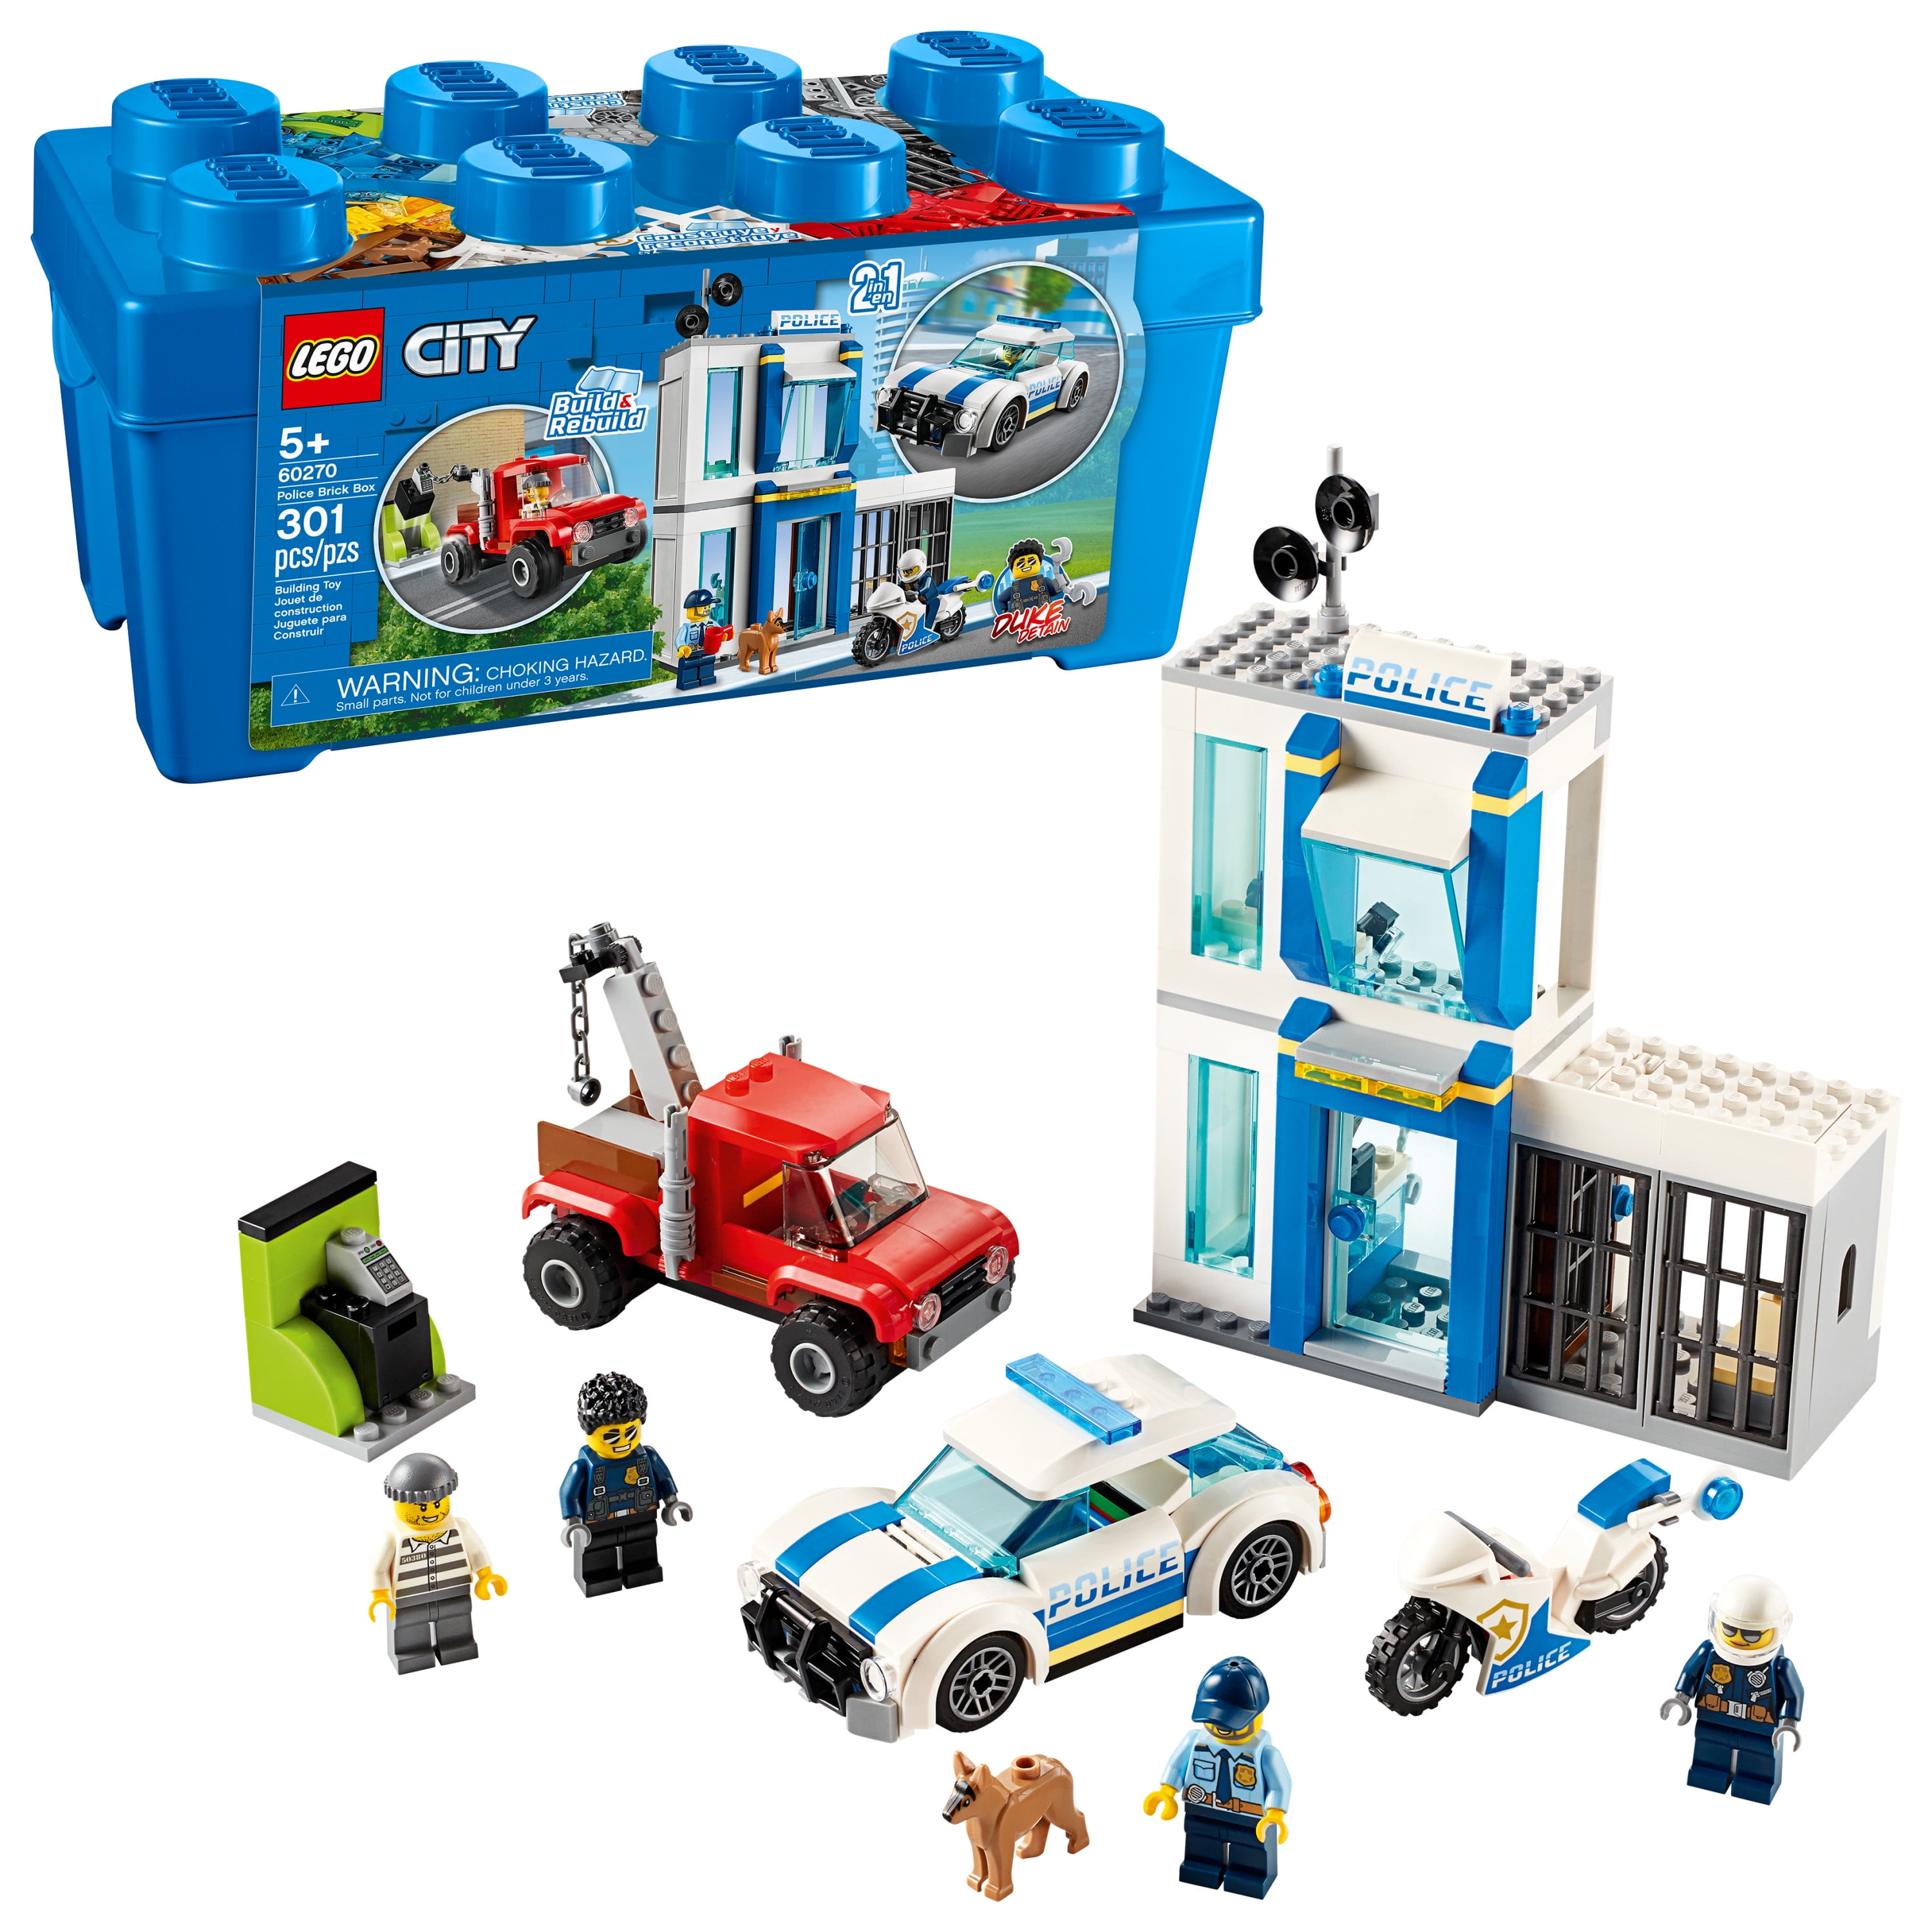 LEGO City Police Brick Box 60270 Building Toy for (301 Pieces) - Walmart.com